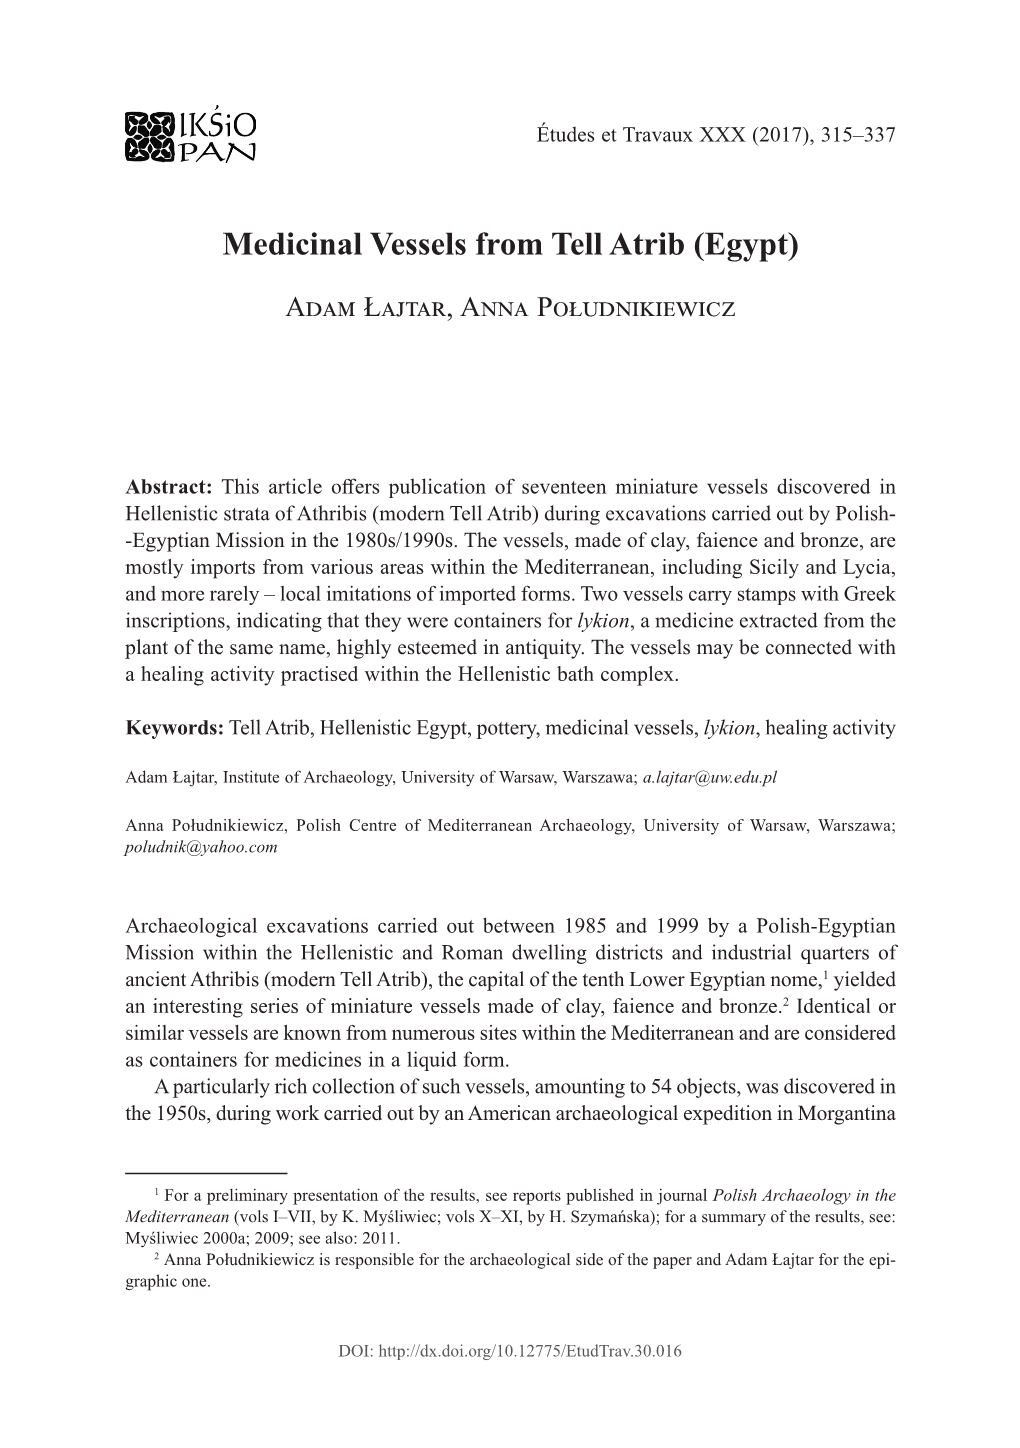 Medicinal Vessels from Tell Atrib (Egypt)